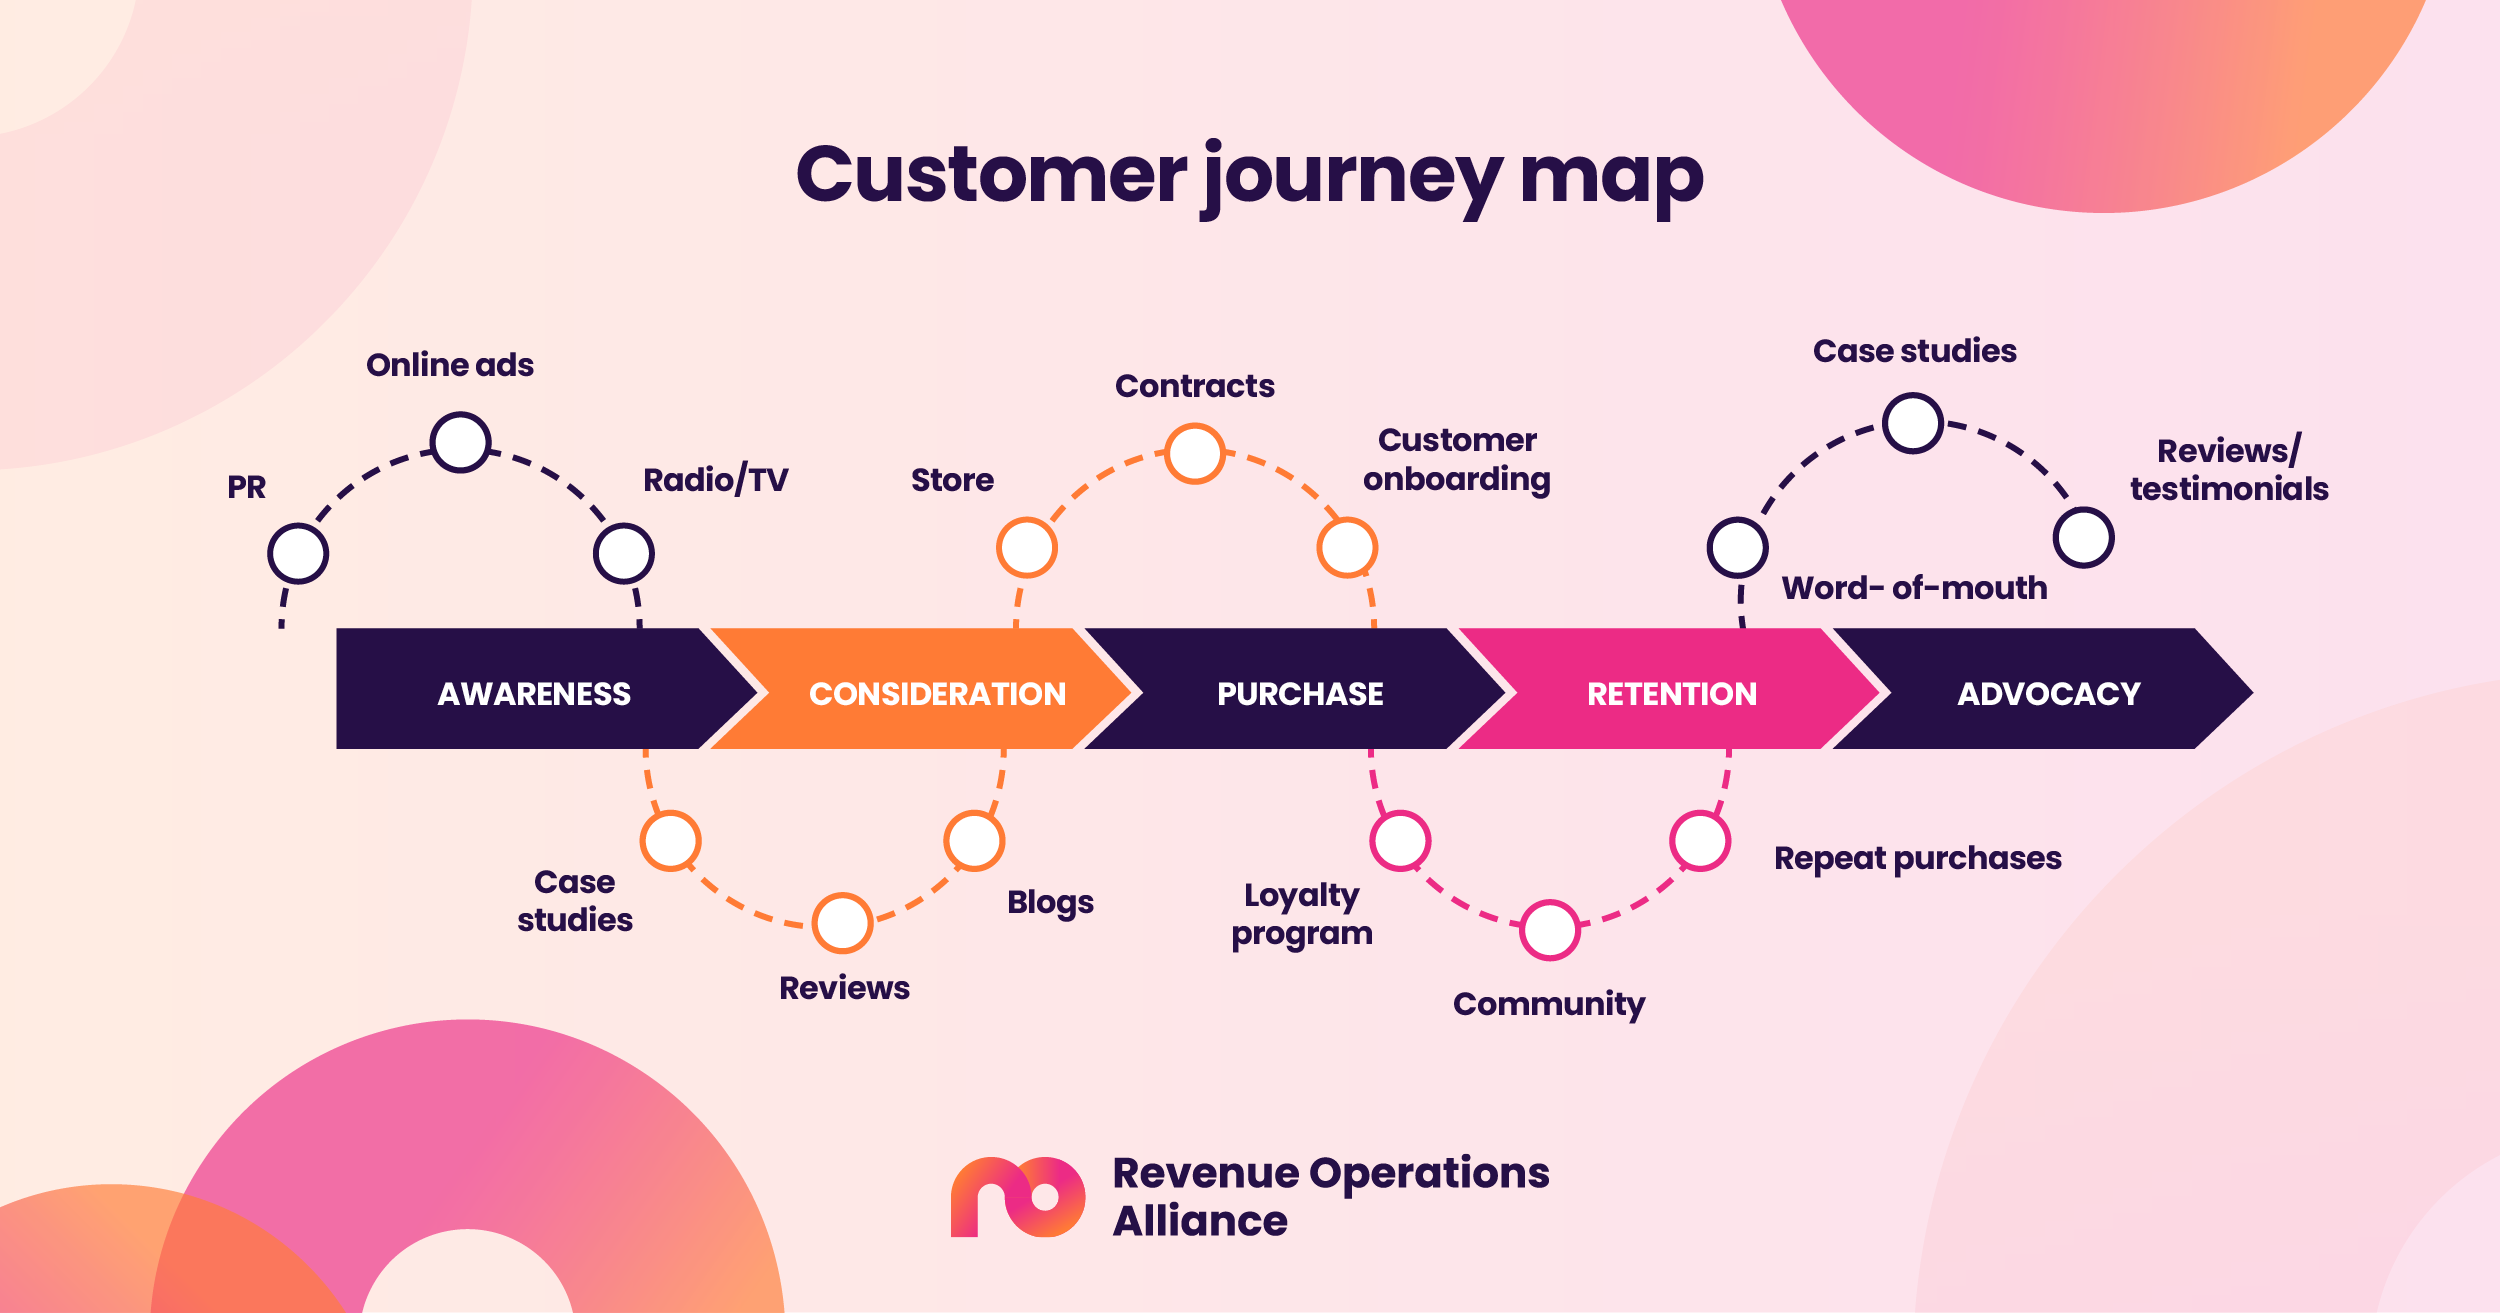 Customer journey map: awareness, consideration, purchase, retention, advocacy